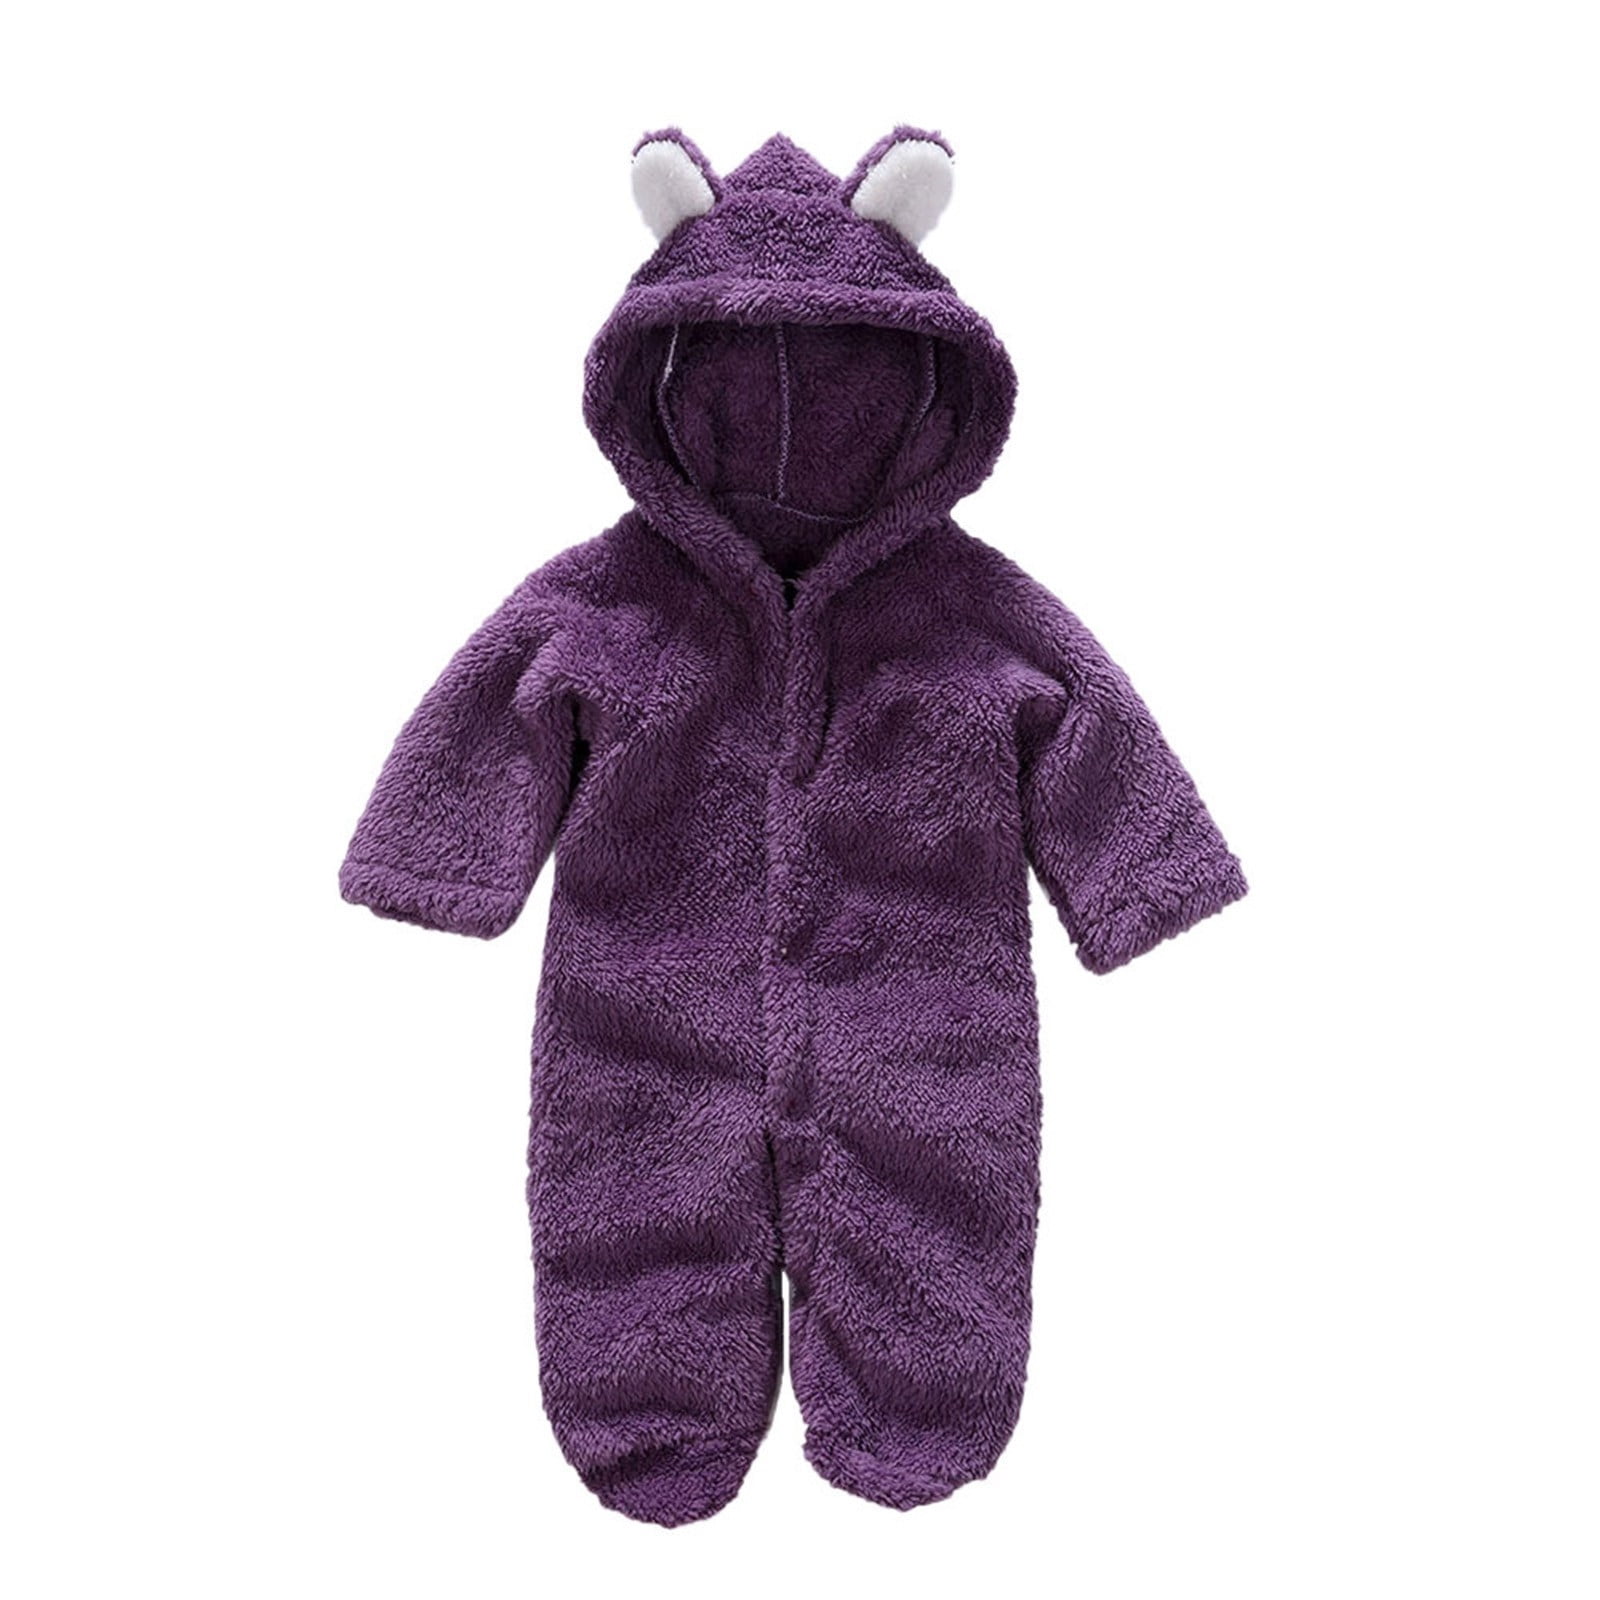 Penkiiy Toddler Baby Boys Girls Color Plush Cute Bear Ears Winter Keep Warm  Jumpsuit Romper Newborn Baby 3-6 Months Purple on Sale 